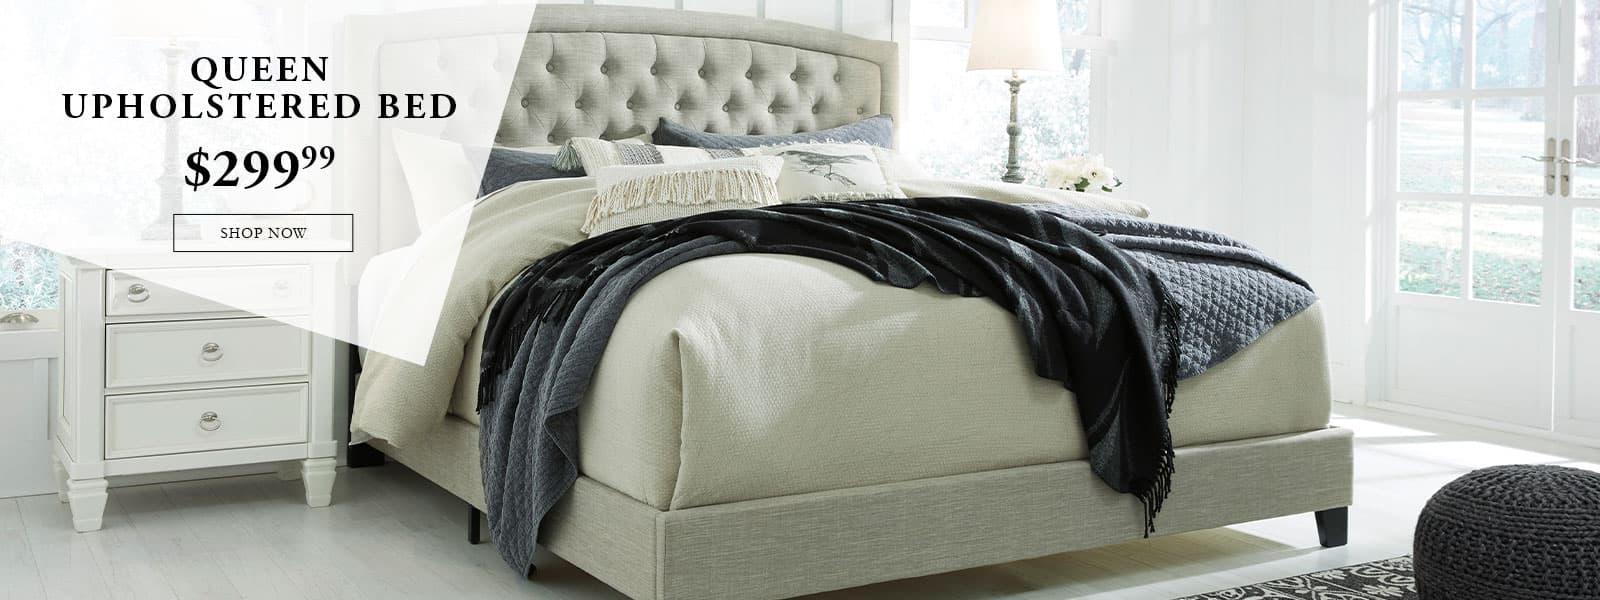 Queen upholstered bed $299.99